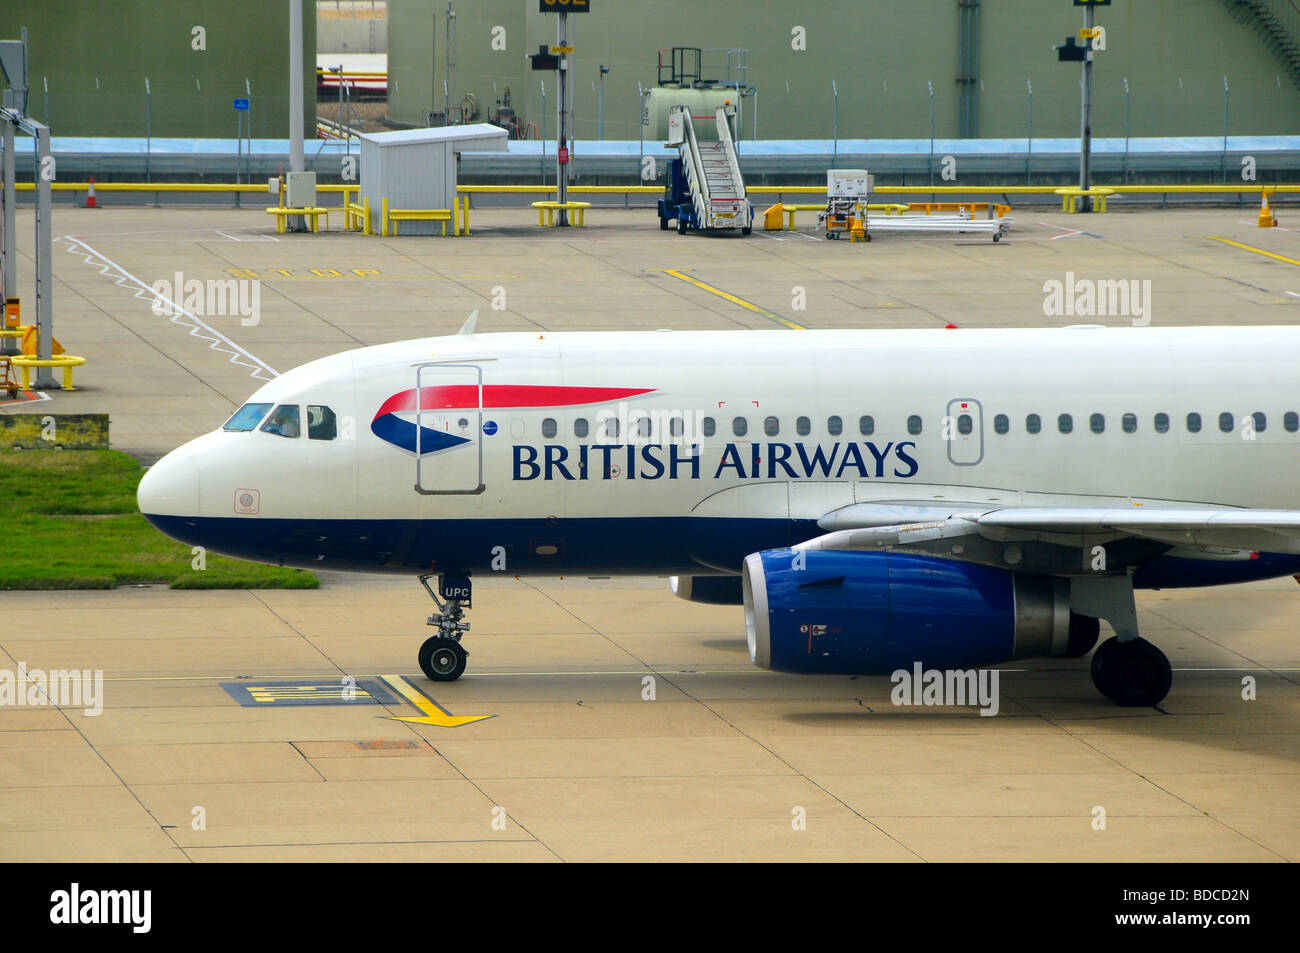 British Airways Airbus A319 plane at Gatwick Airport, London, England Stock Photo